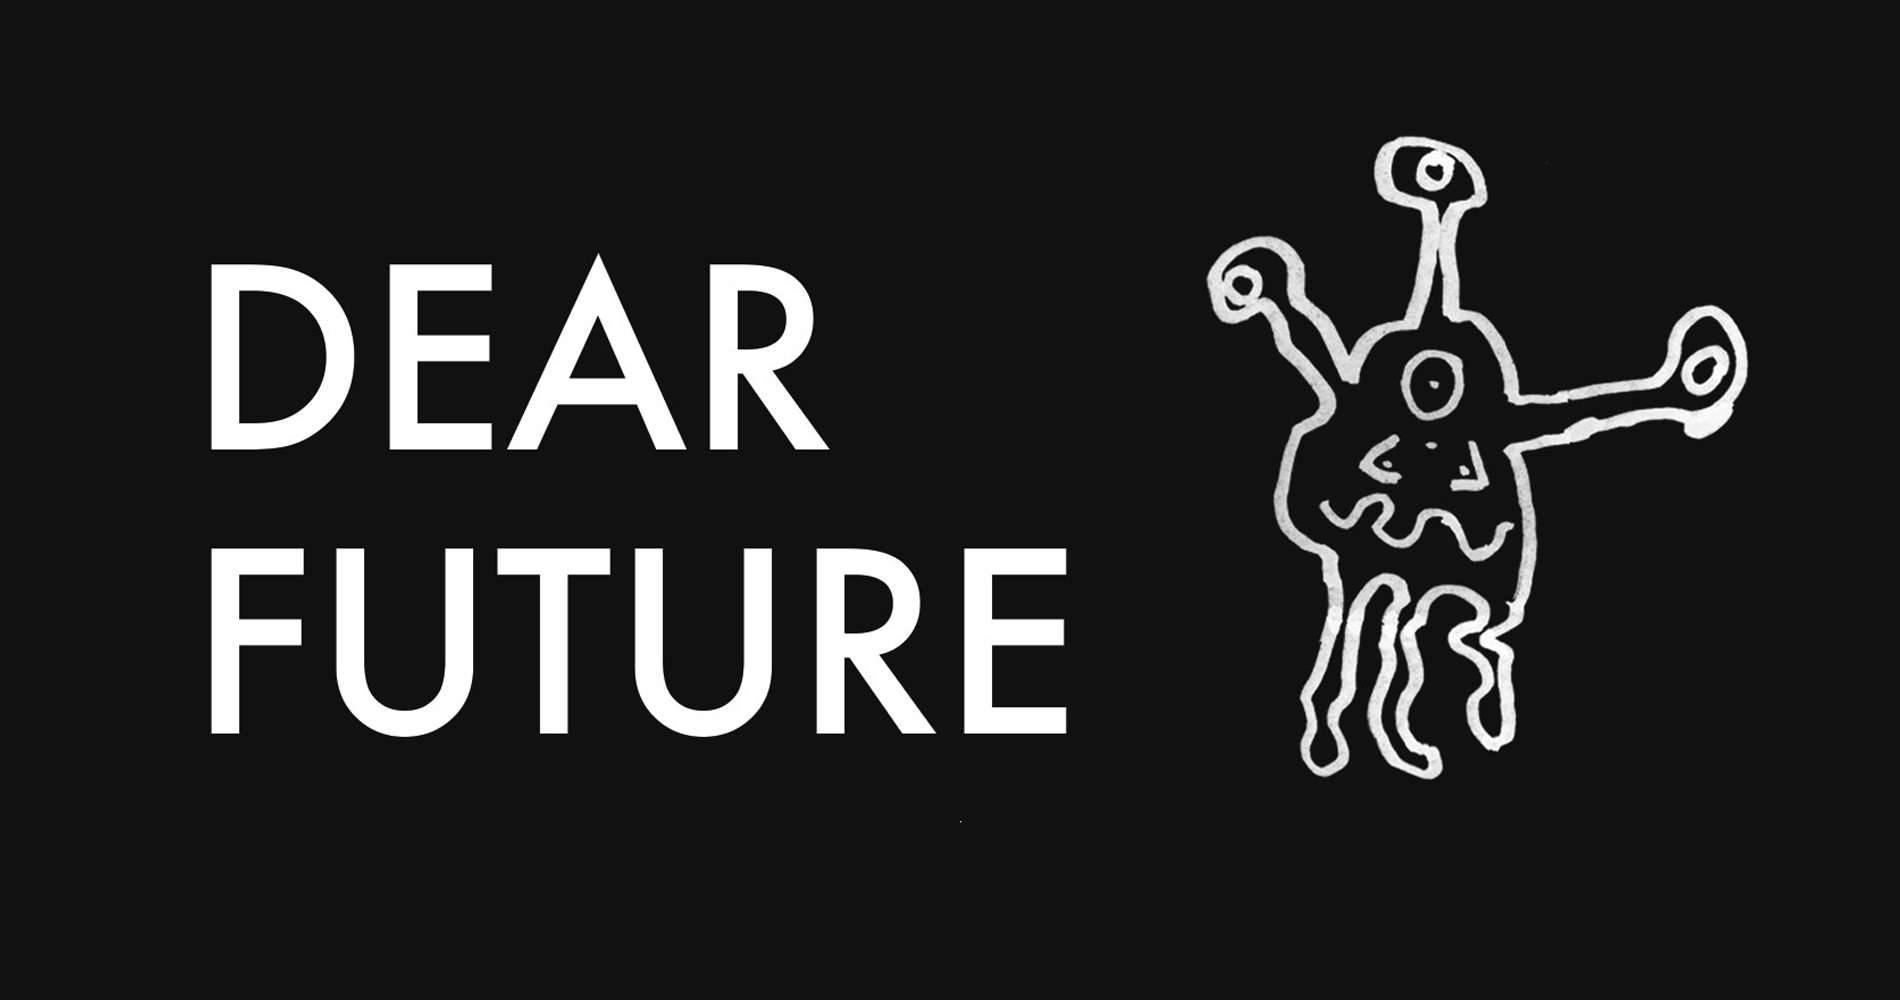 Dear Future logo with little alien illustration